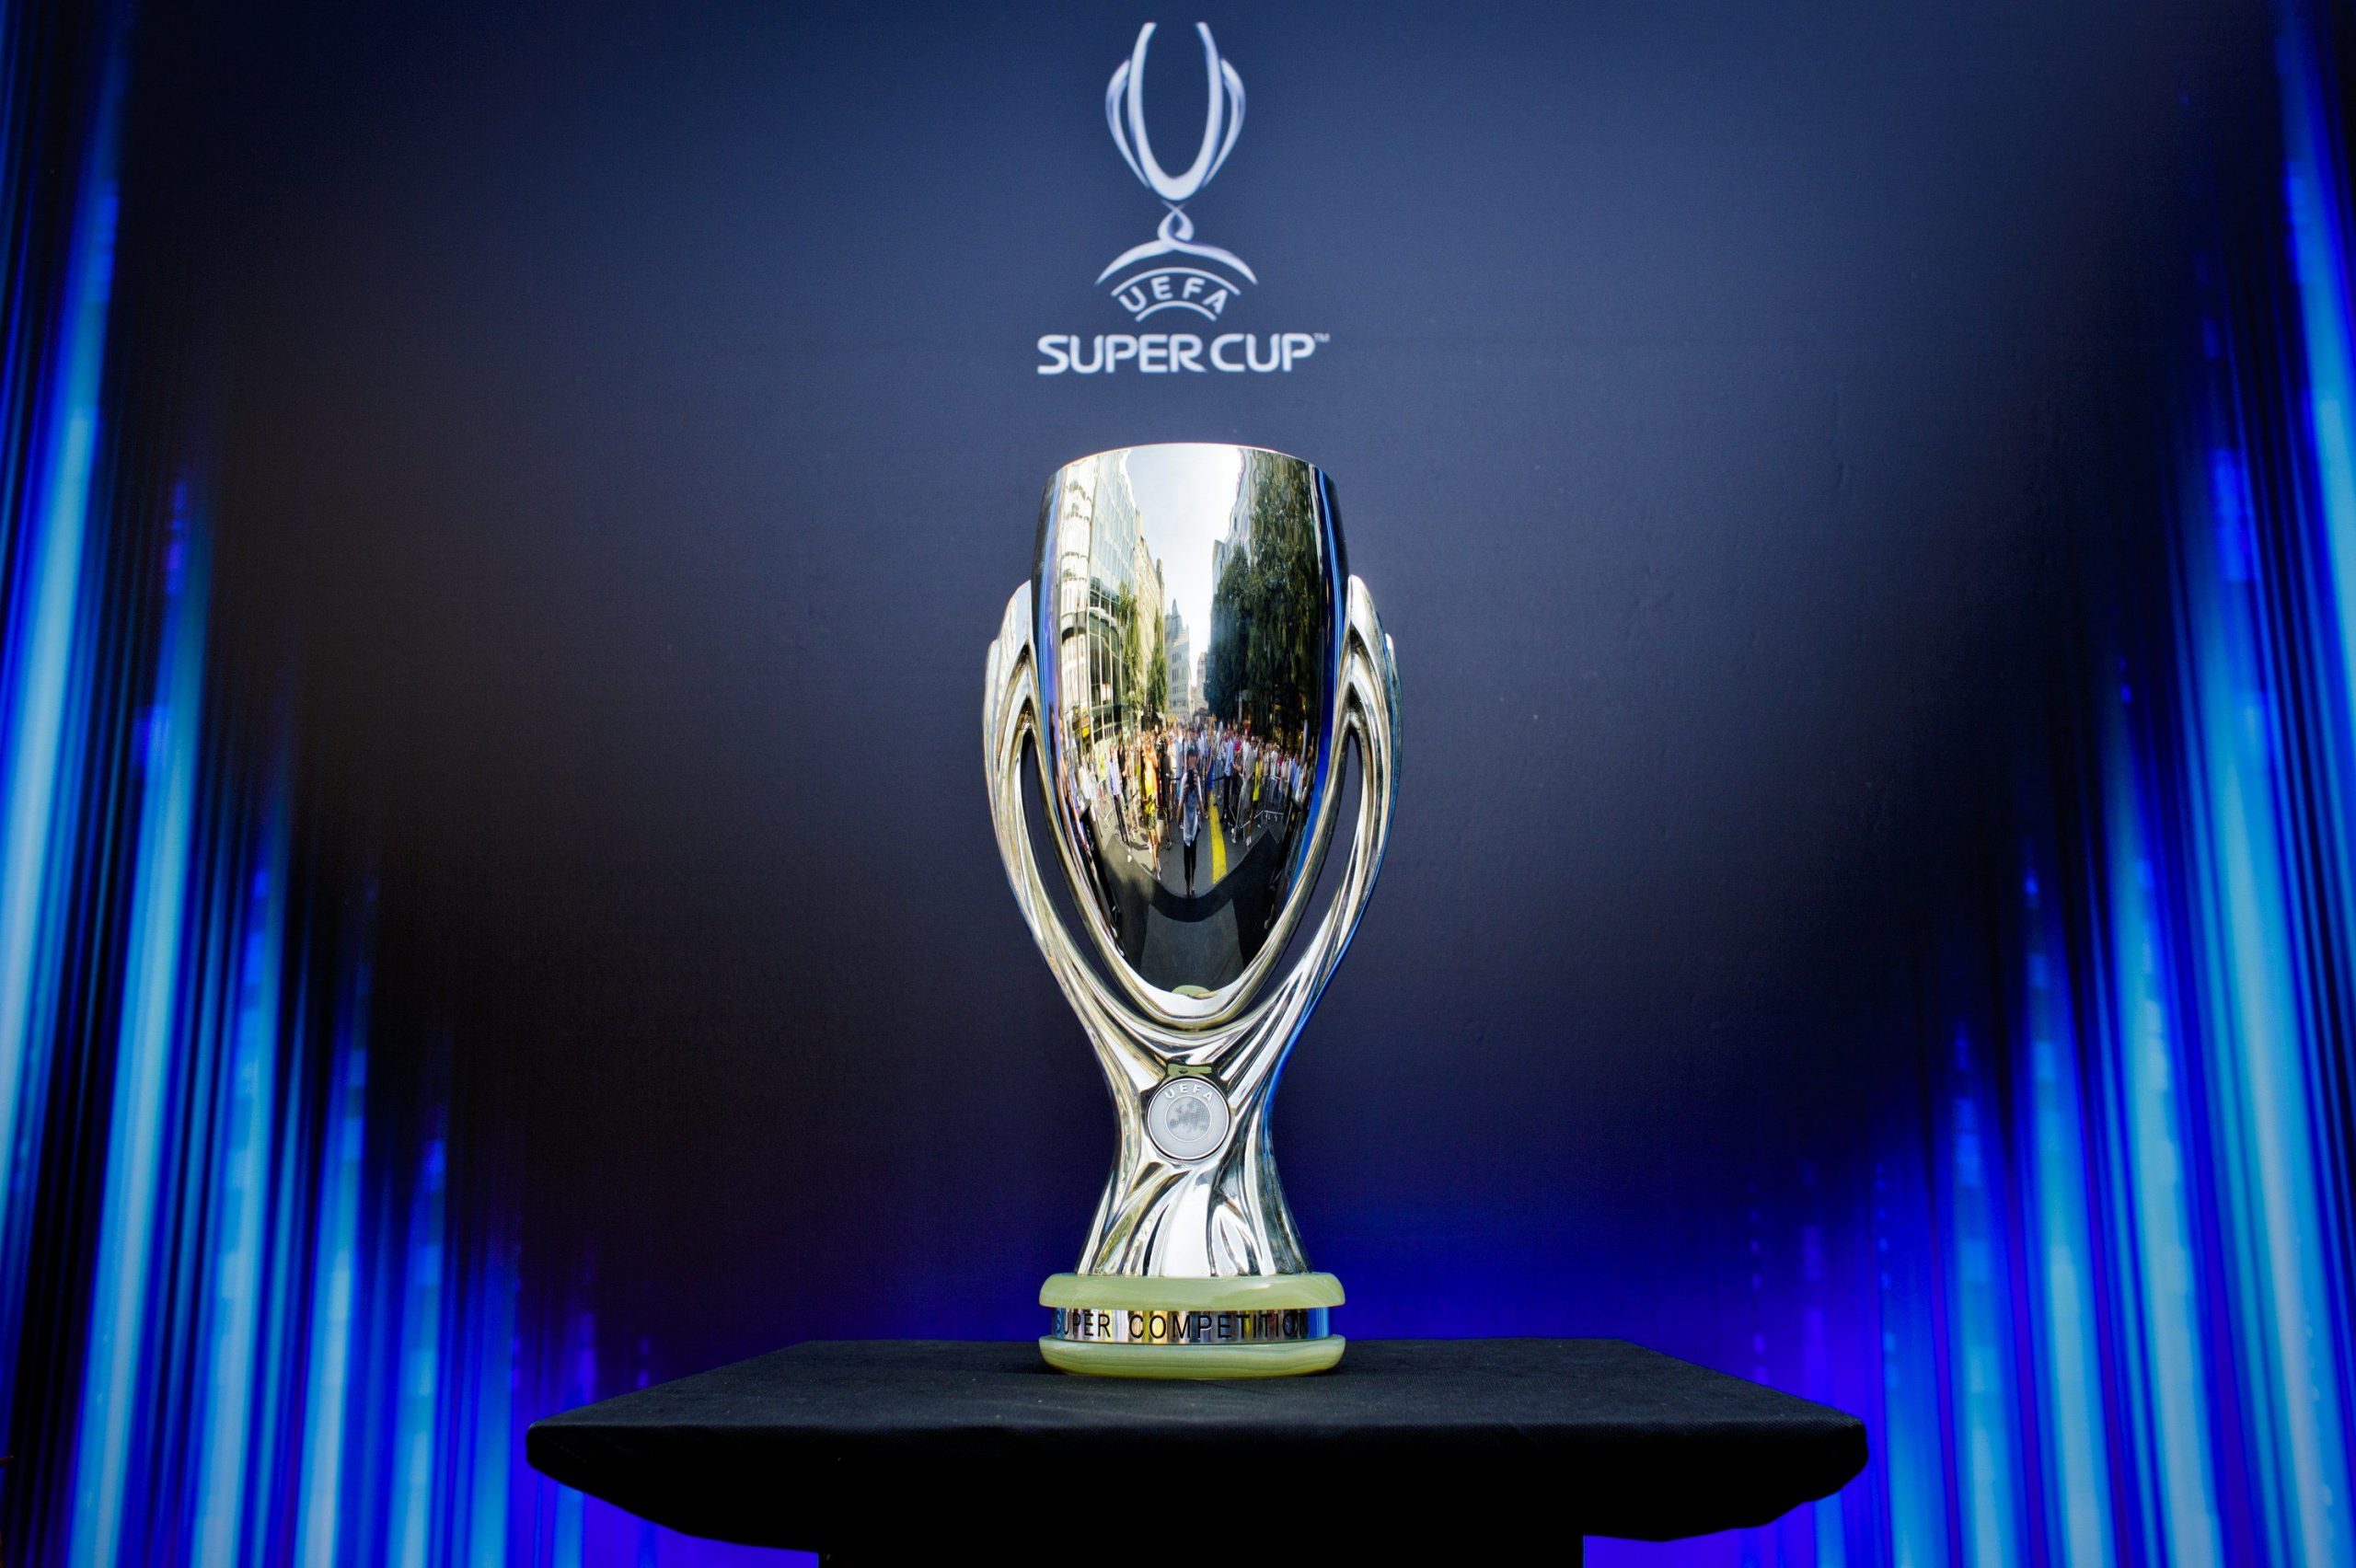 БК Лига Ставок бесплатно покажет матч за Суперкубок УЕФА